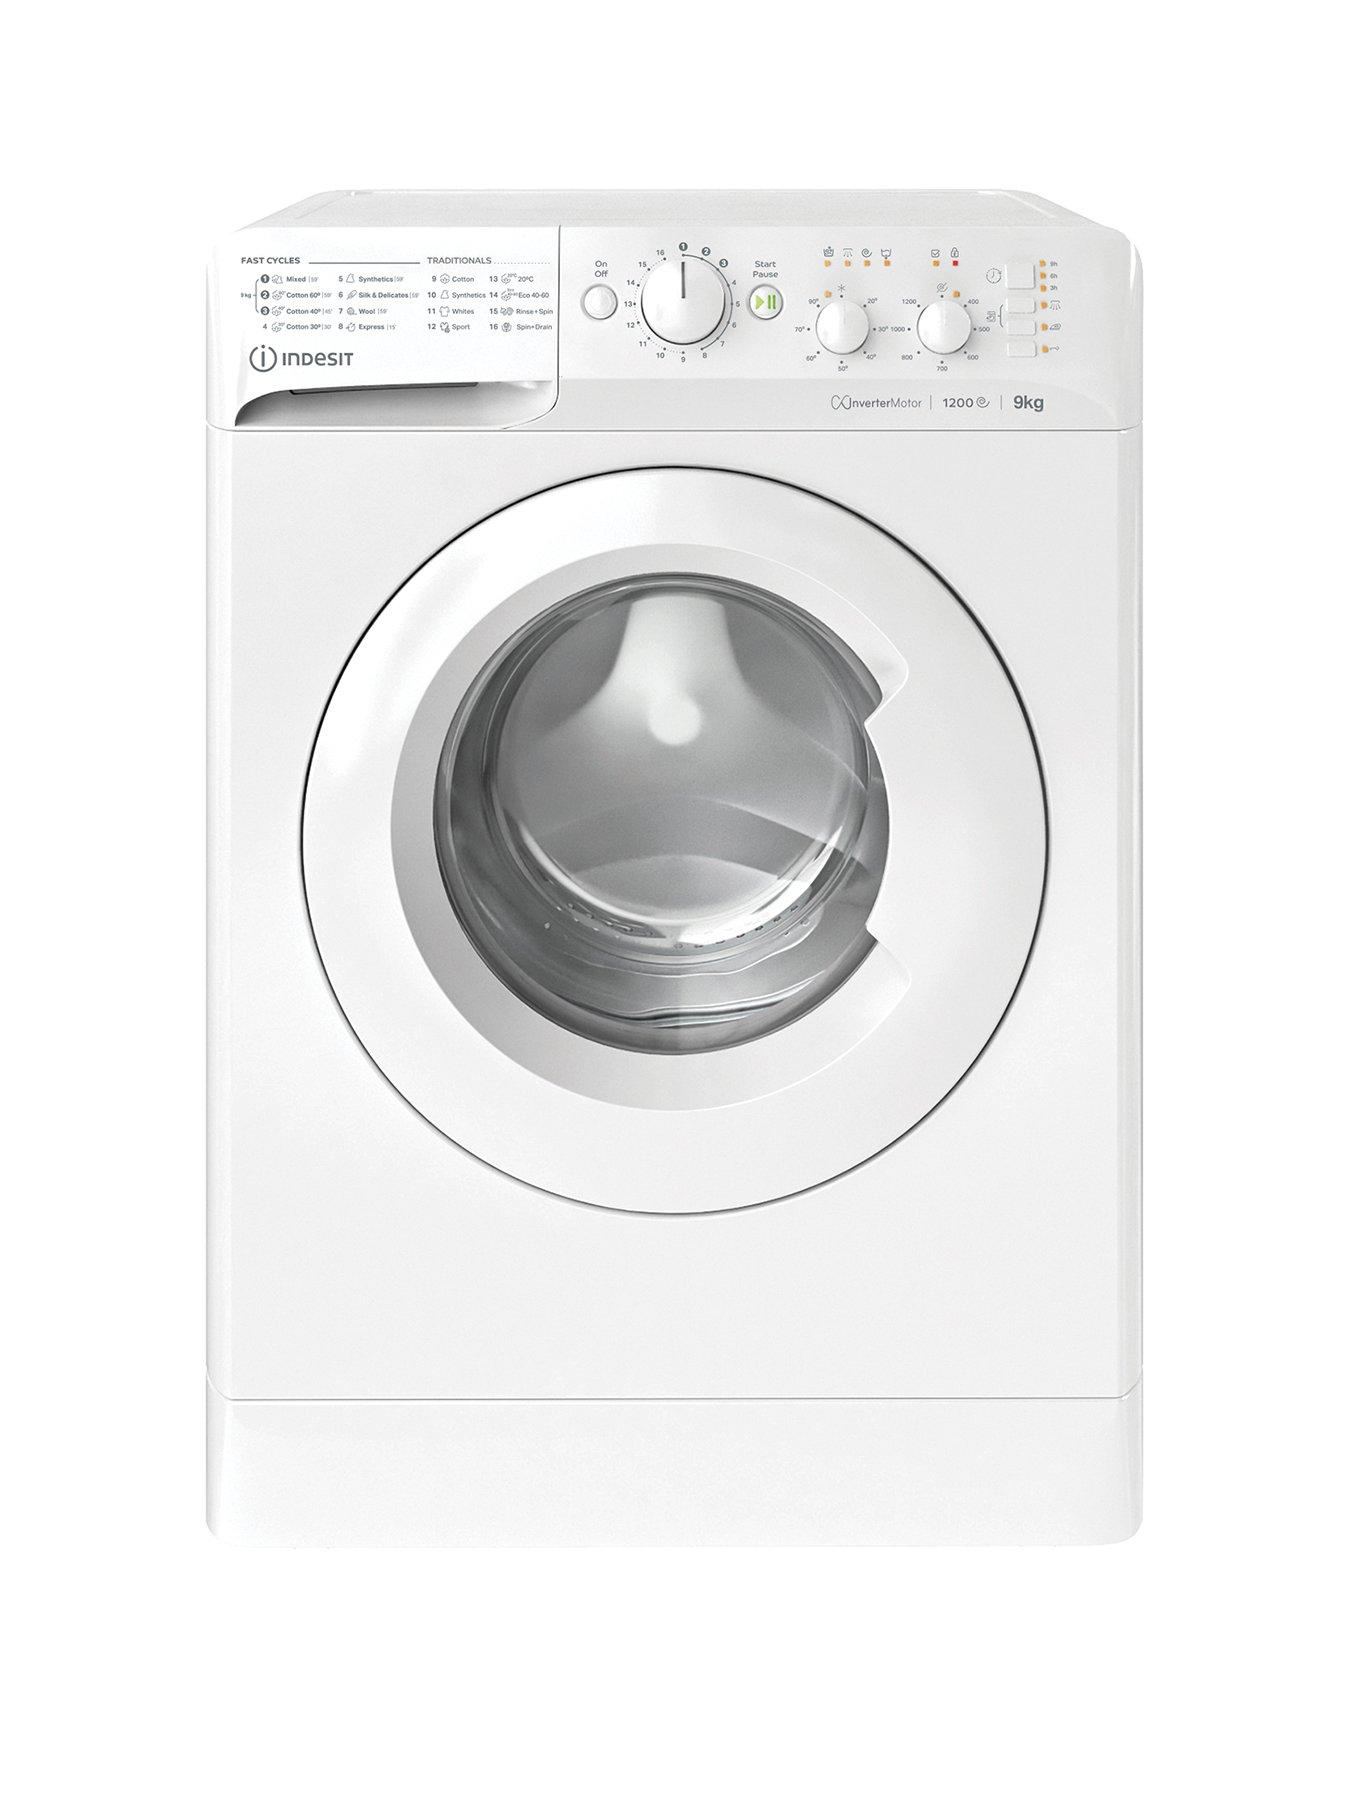 Indesit Mtwc91295Wukn 9Kg Load 1200Rpm Spin Washing Machine - White